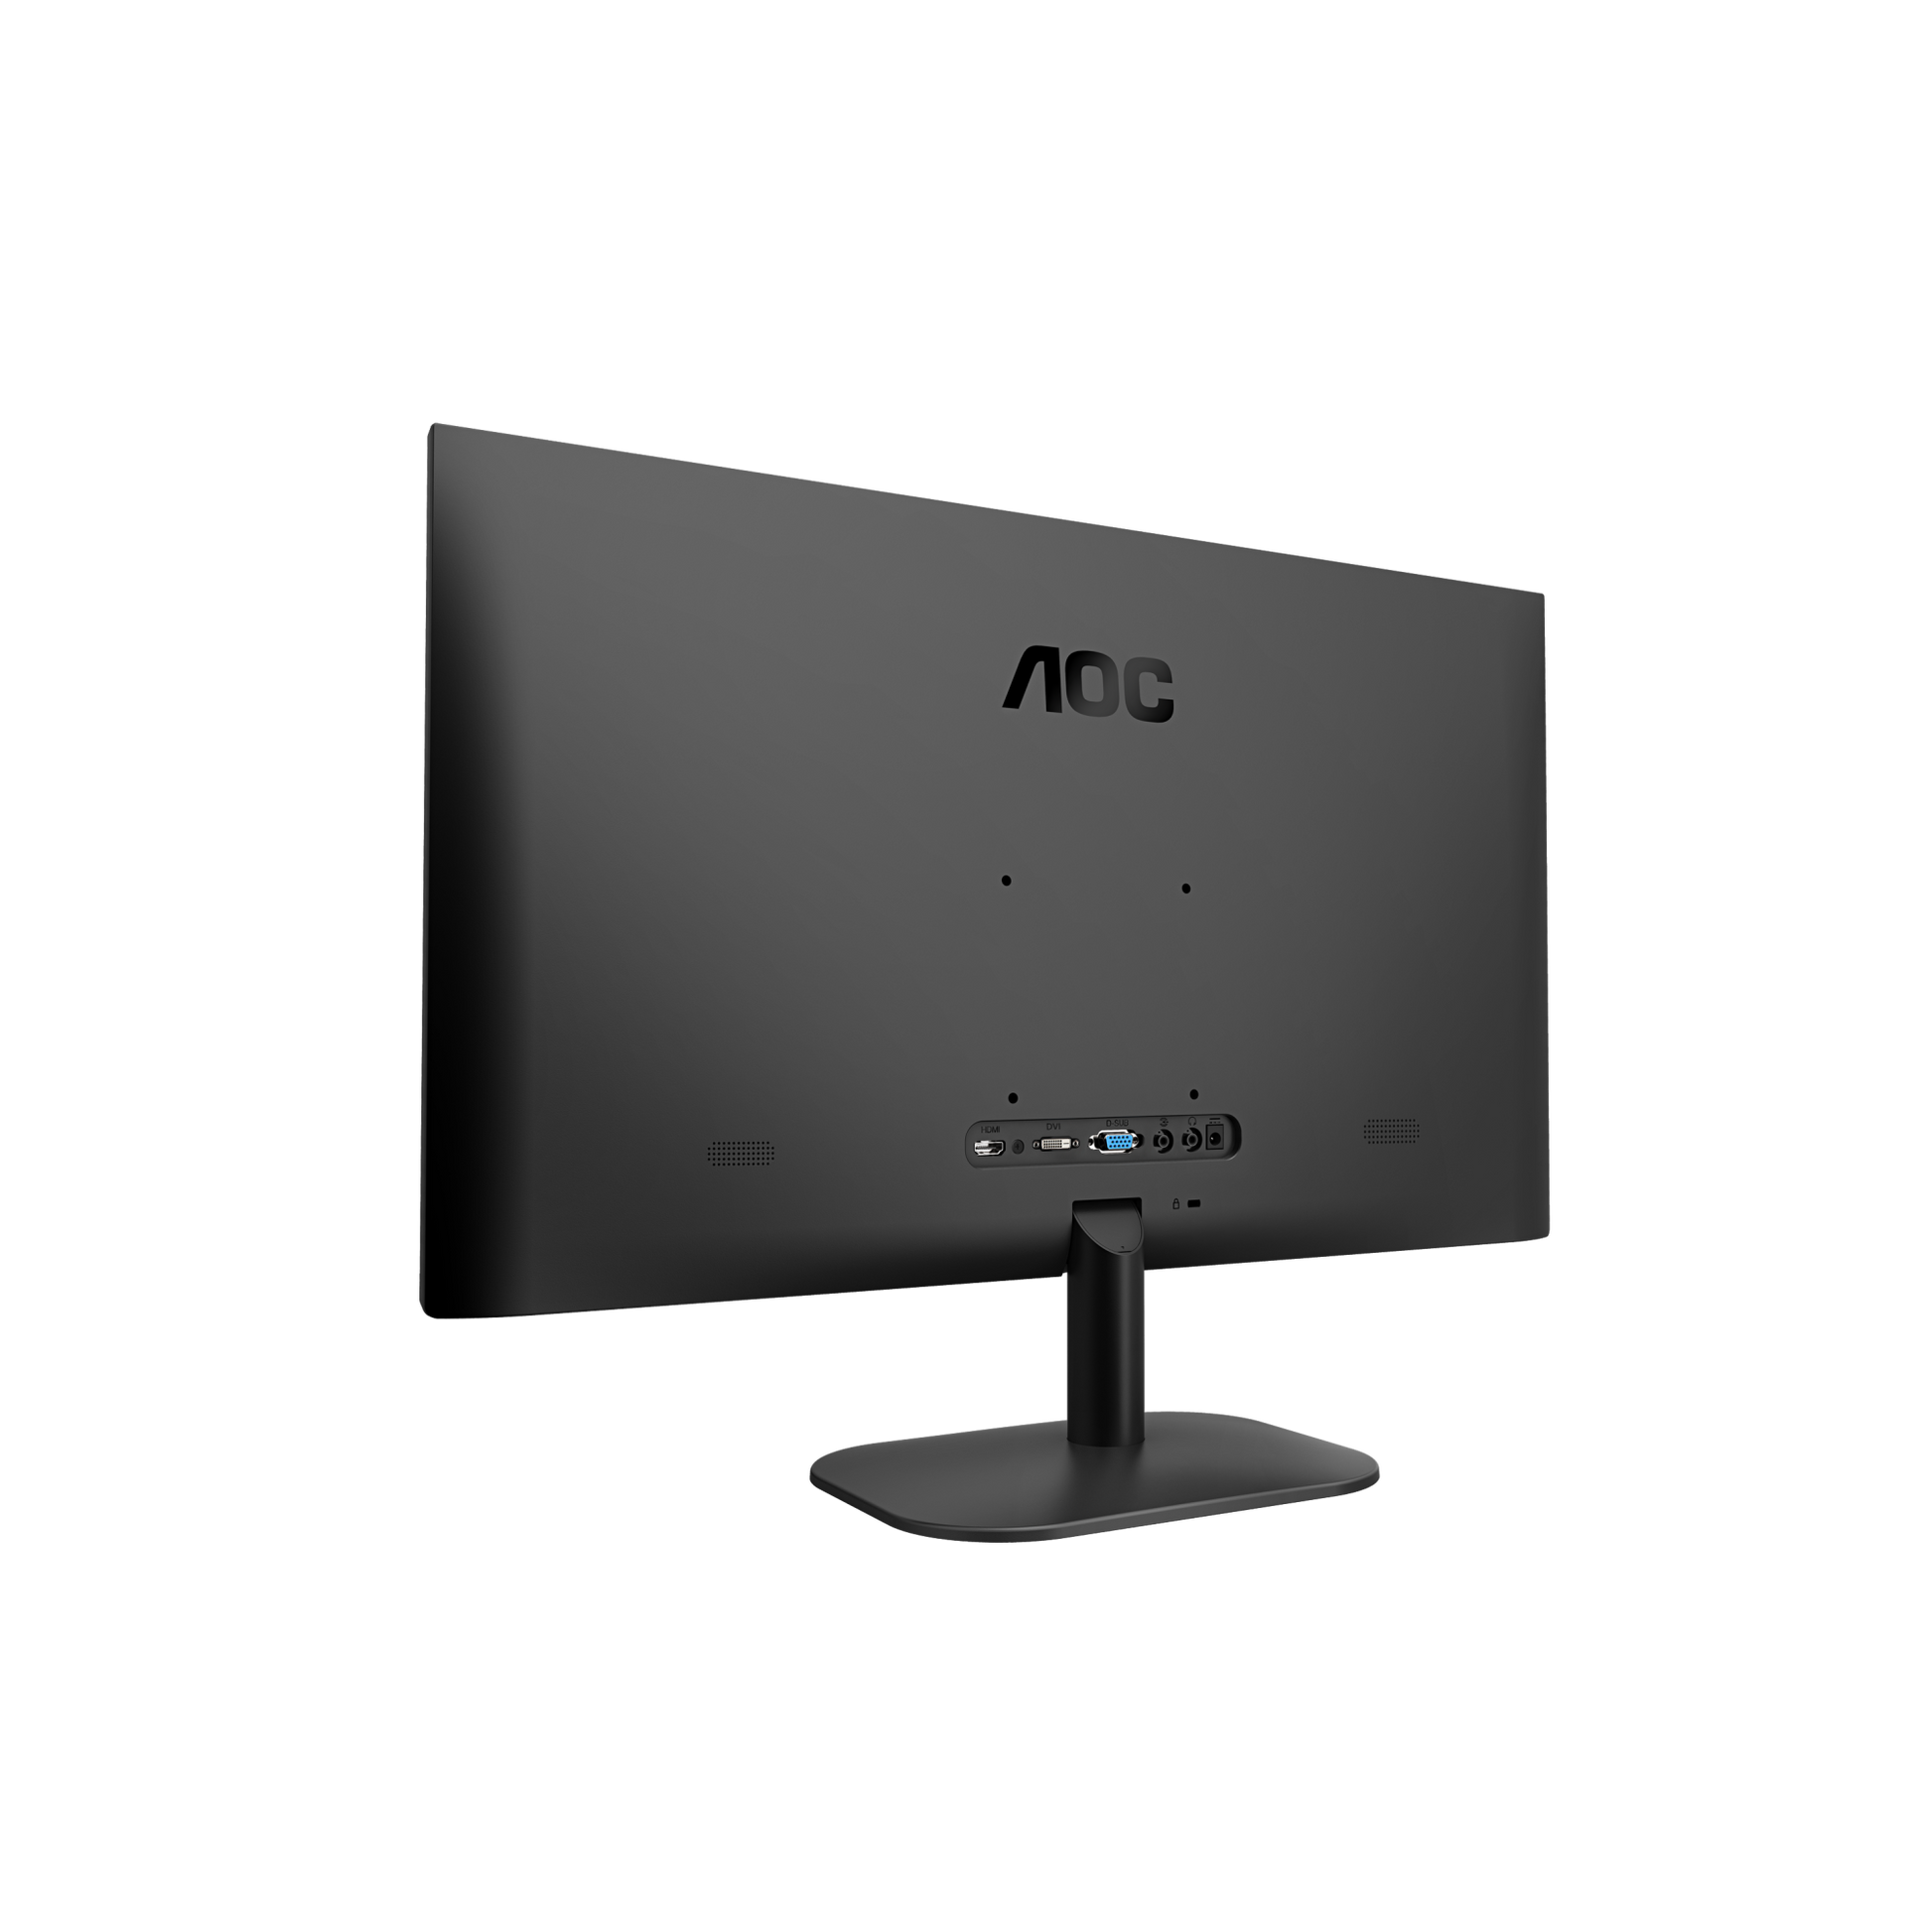 AOC 23.8 inch IPS Monitor